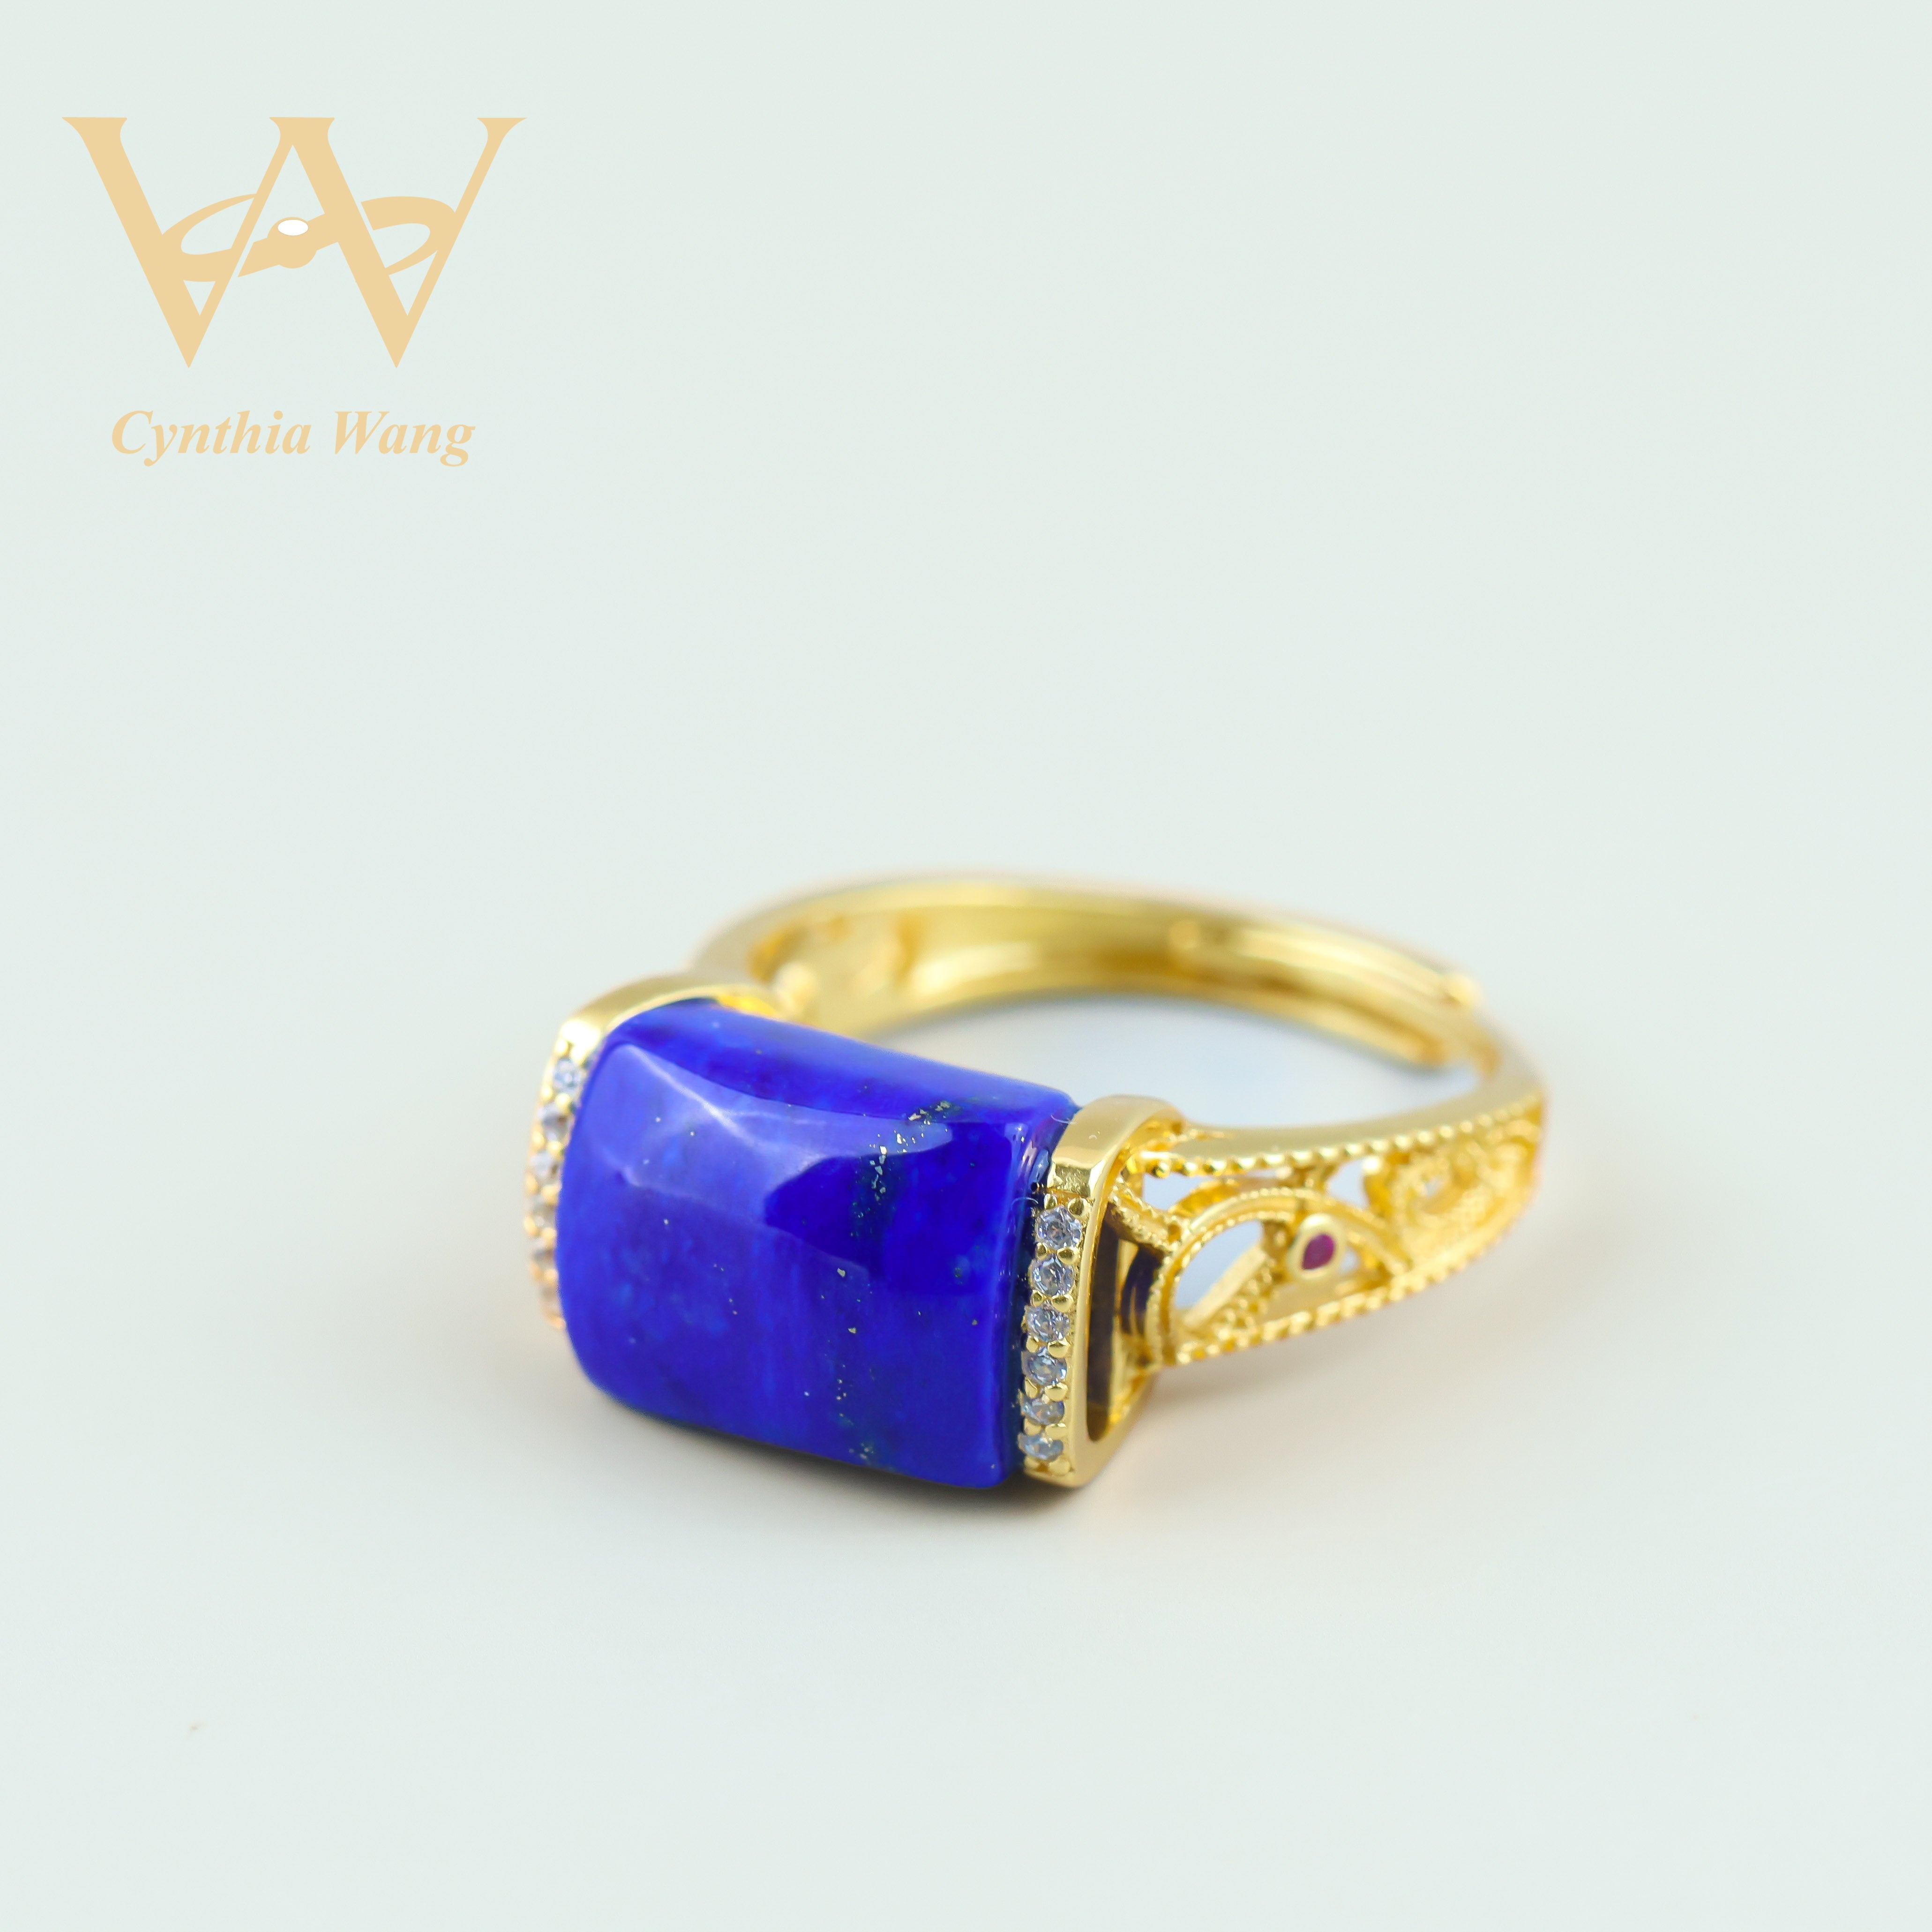 'Twilight Whispers' Lapis Lazuli Ring